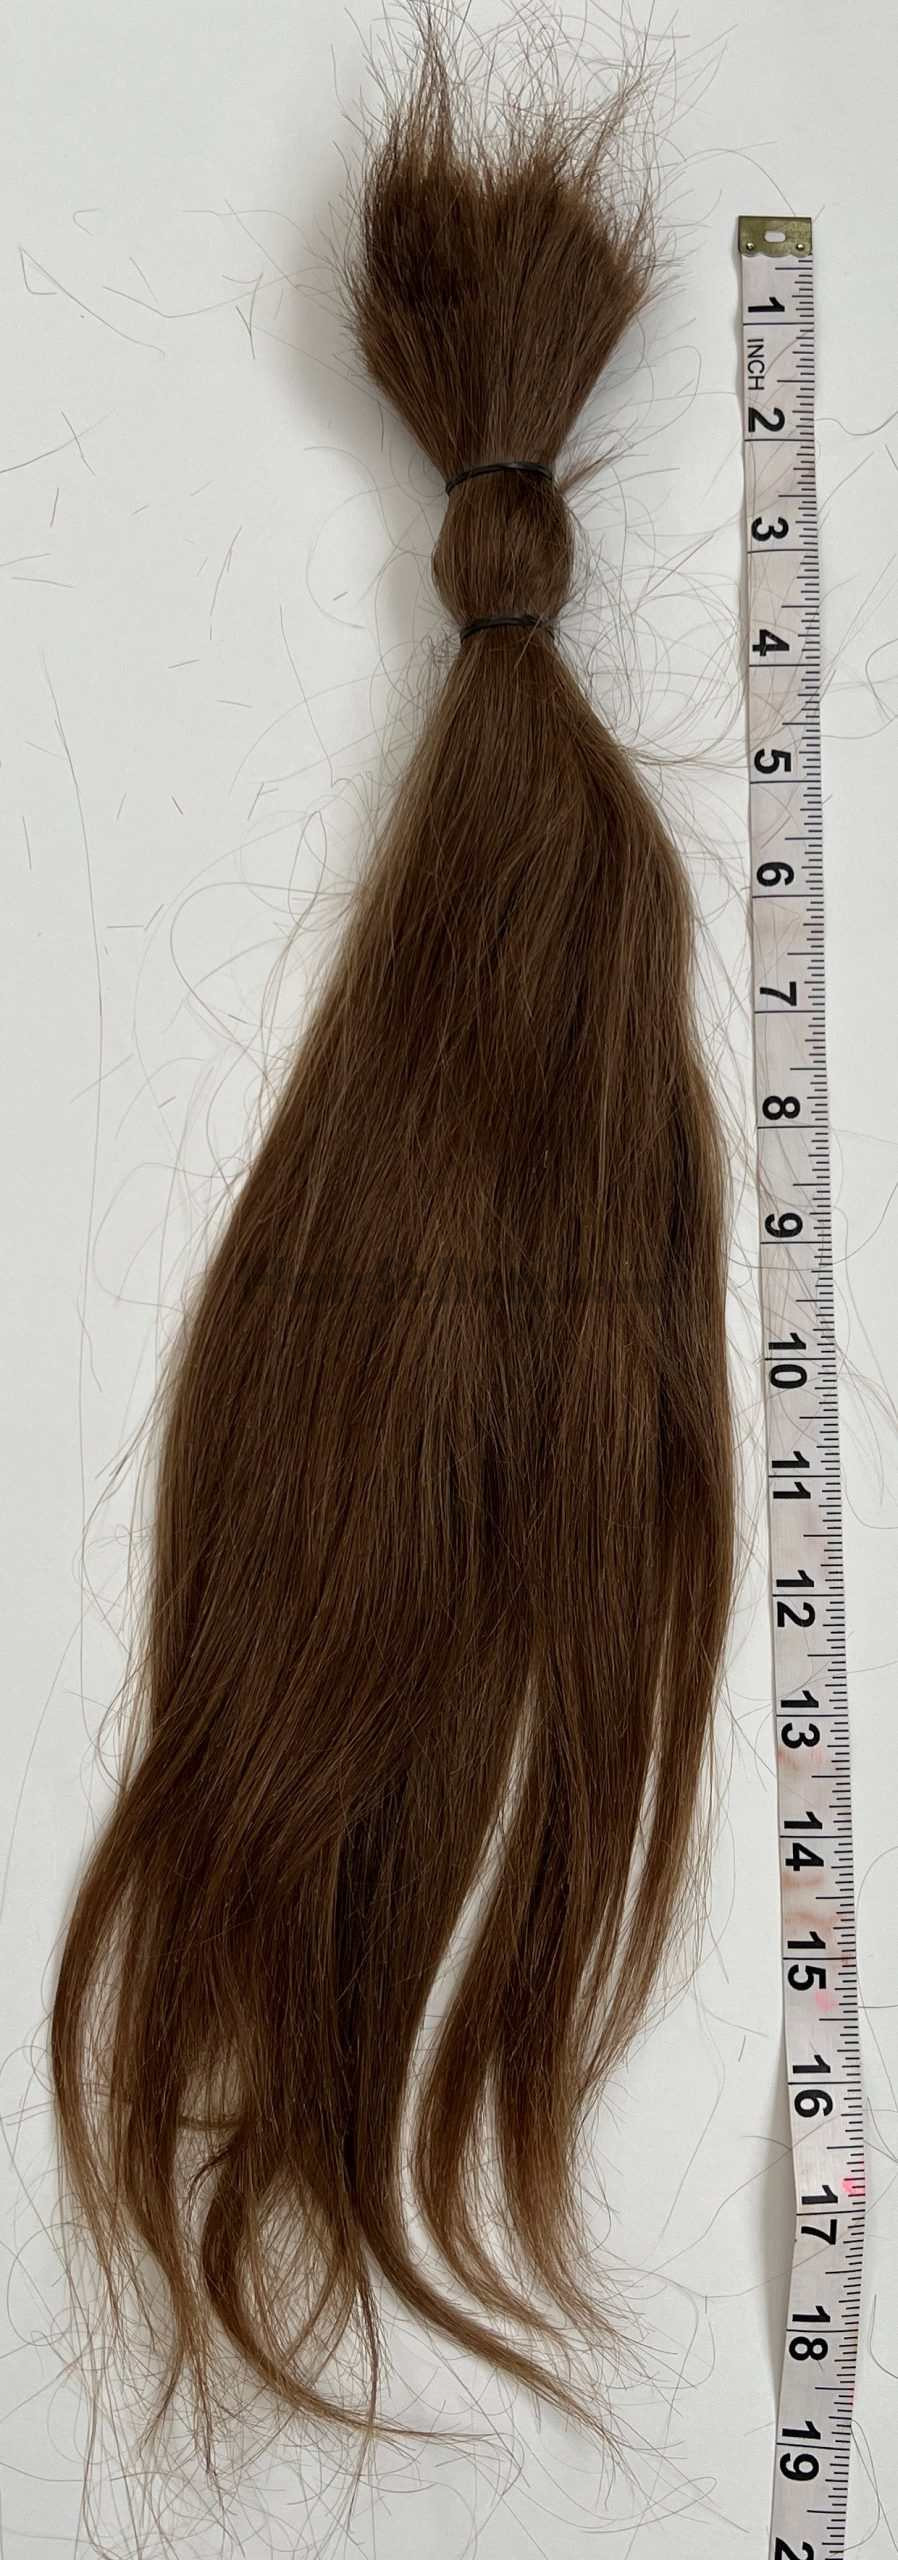 2023-0131 Hair04